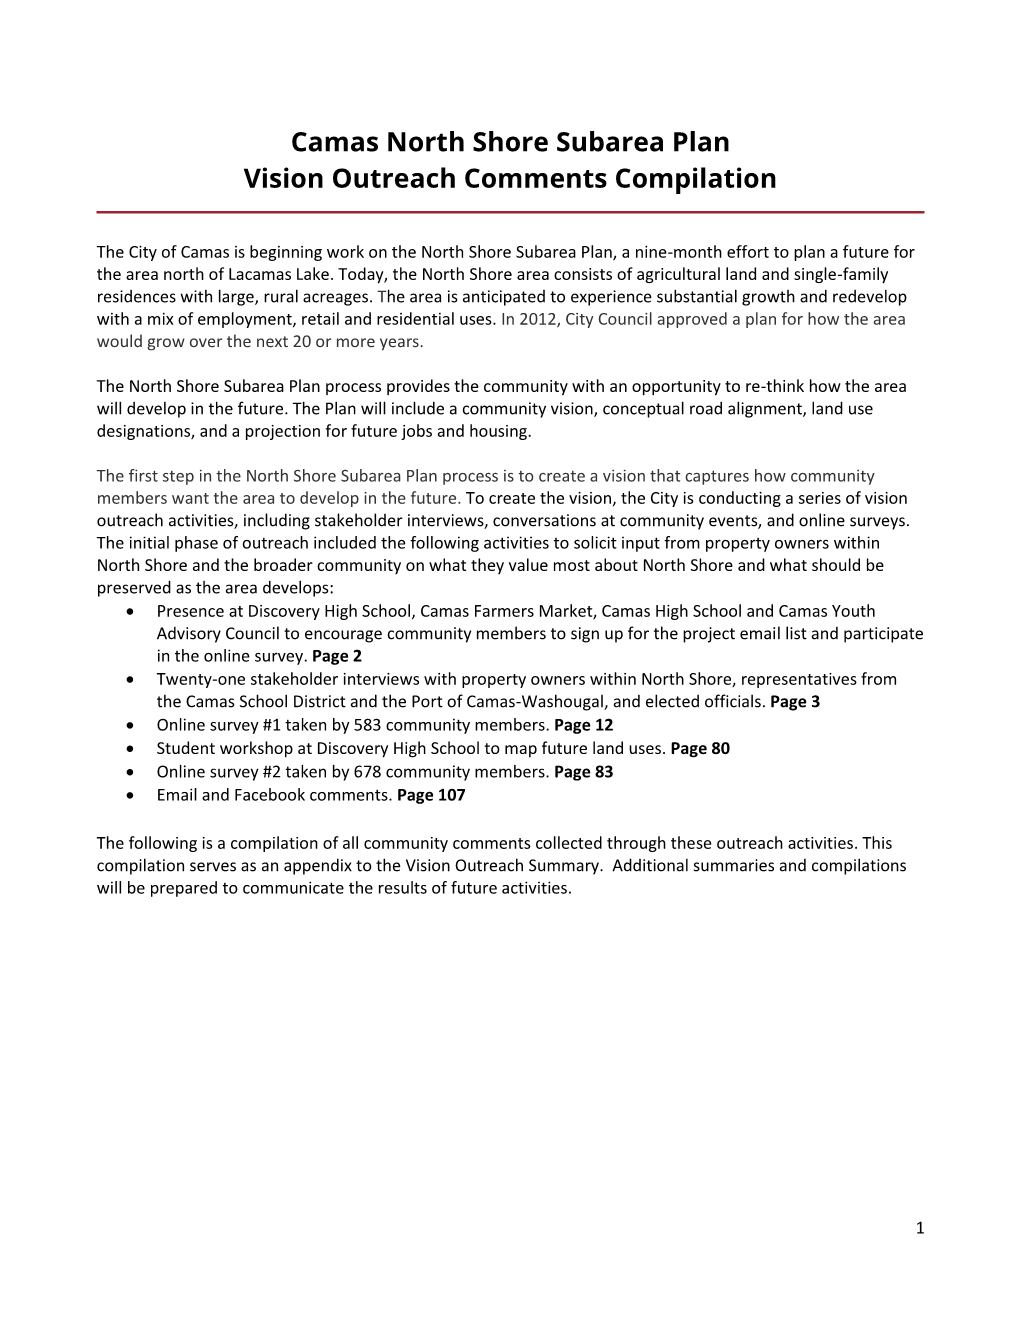 Camas North Shore Subarea Plan Vision Outreach Comments Compilation